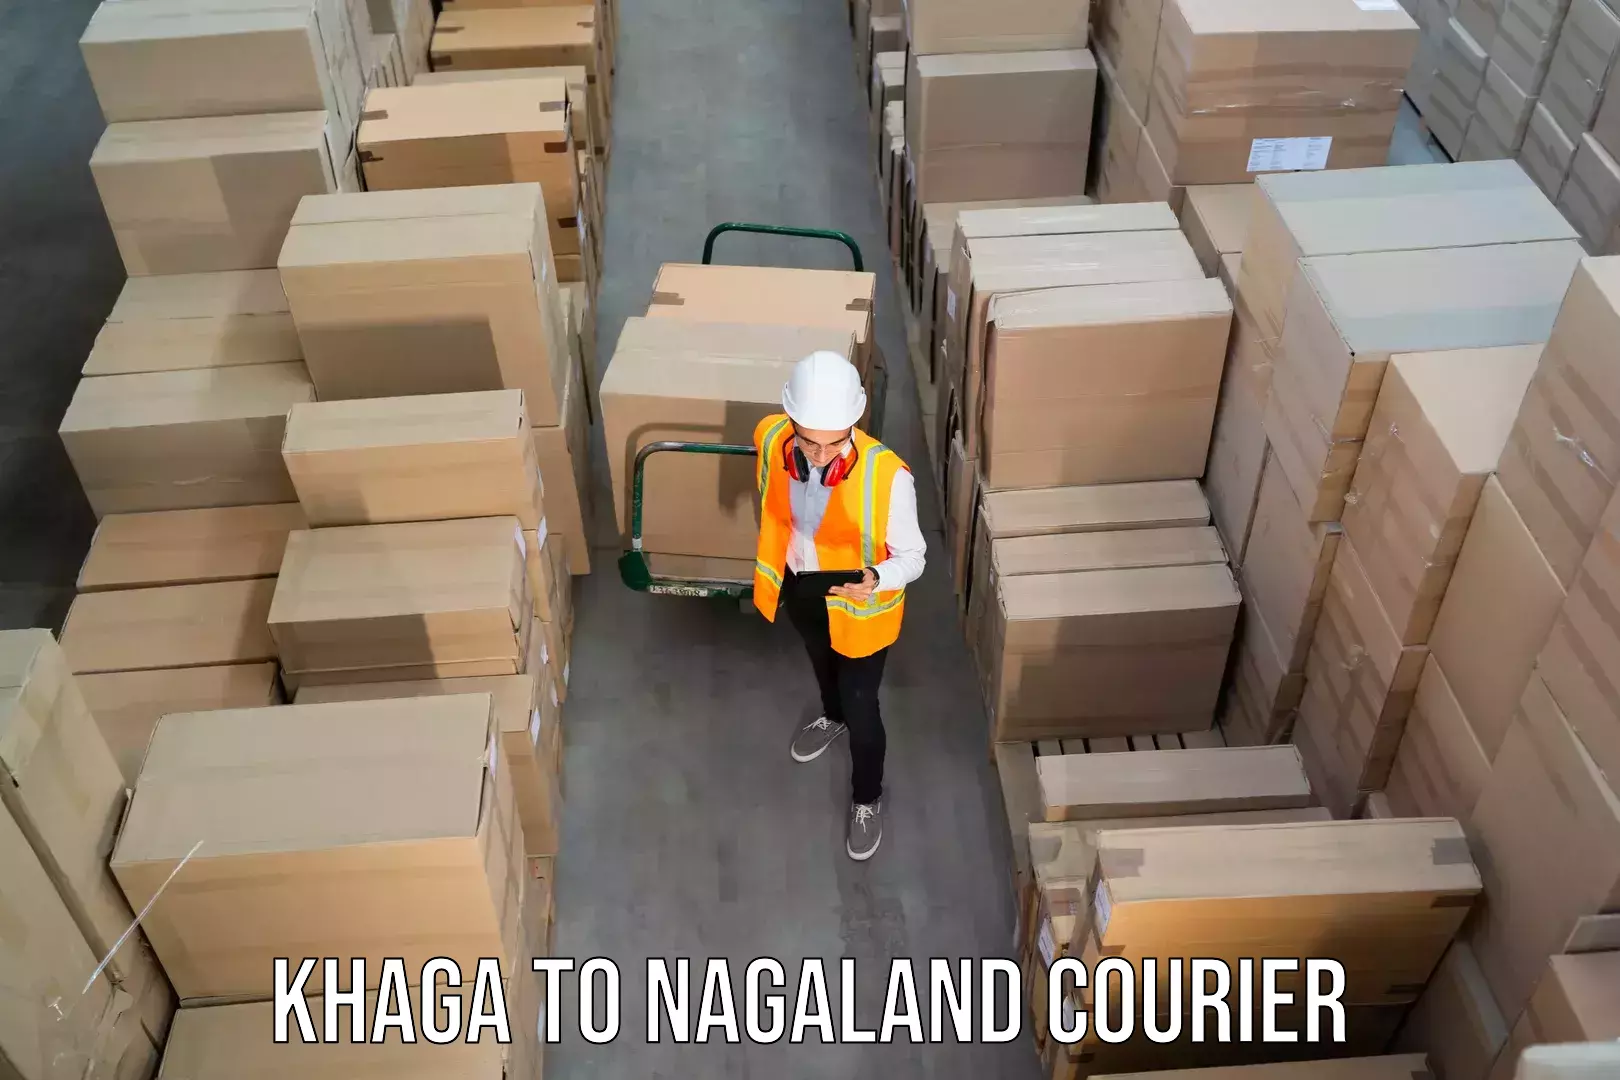 Courier service comparison Khaga to Kohima